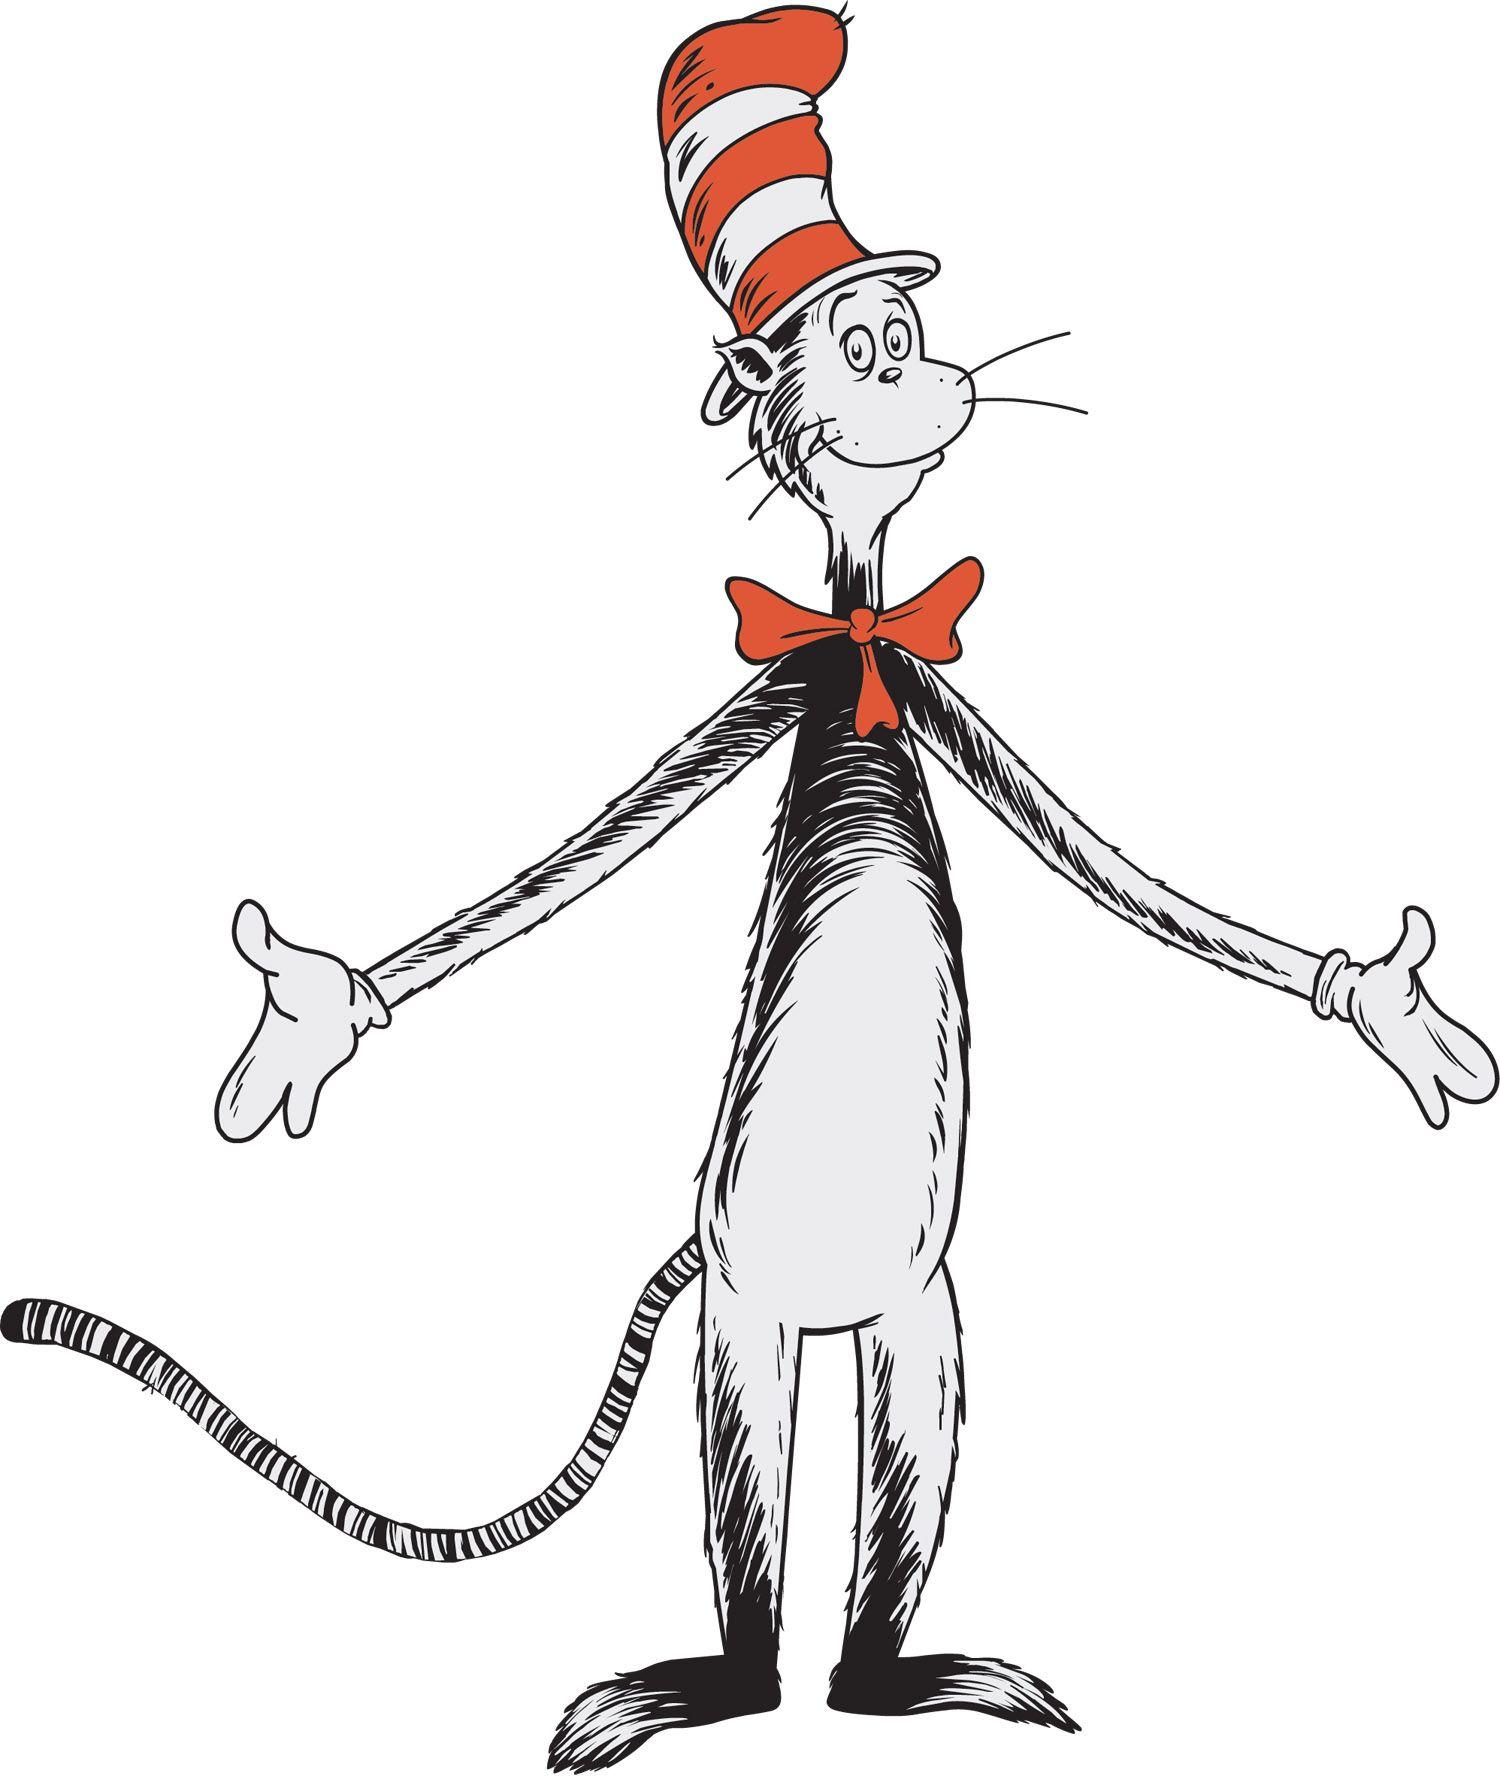 1500x1776 Hình nền Dr. Seuss: The Cat In The Hat, Phim hoạt hình, HQ Dr. Seuss: The Cat In The Hat.  Hình nền 4K 2019